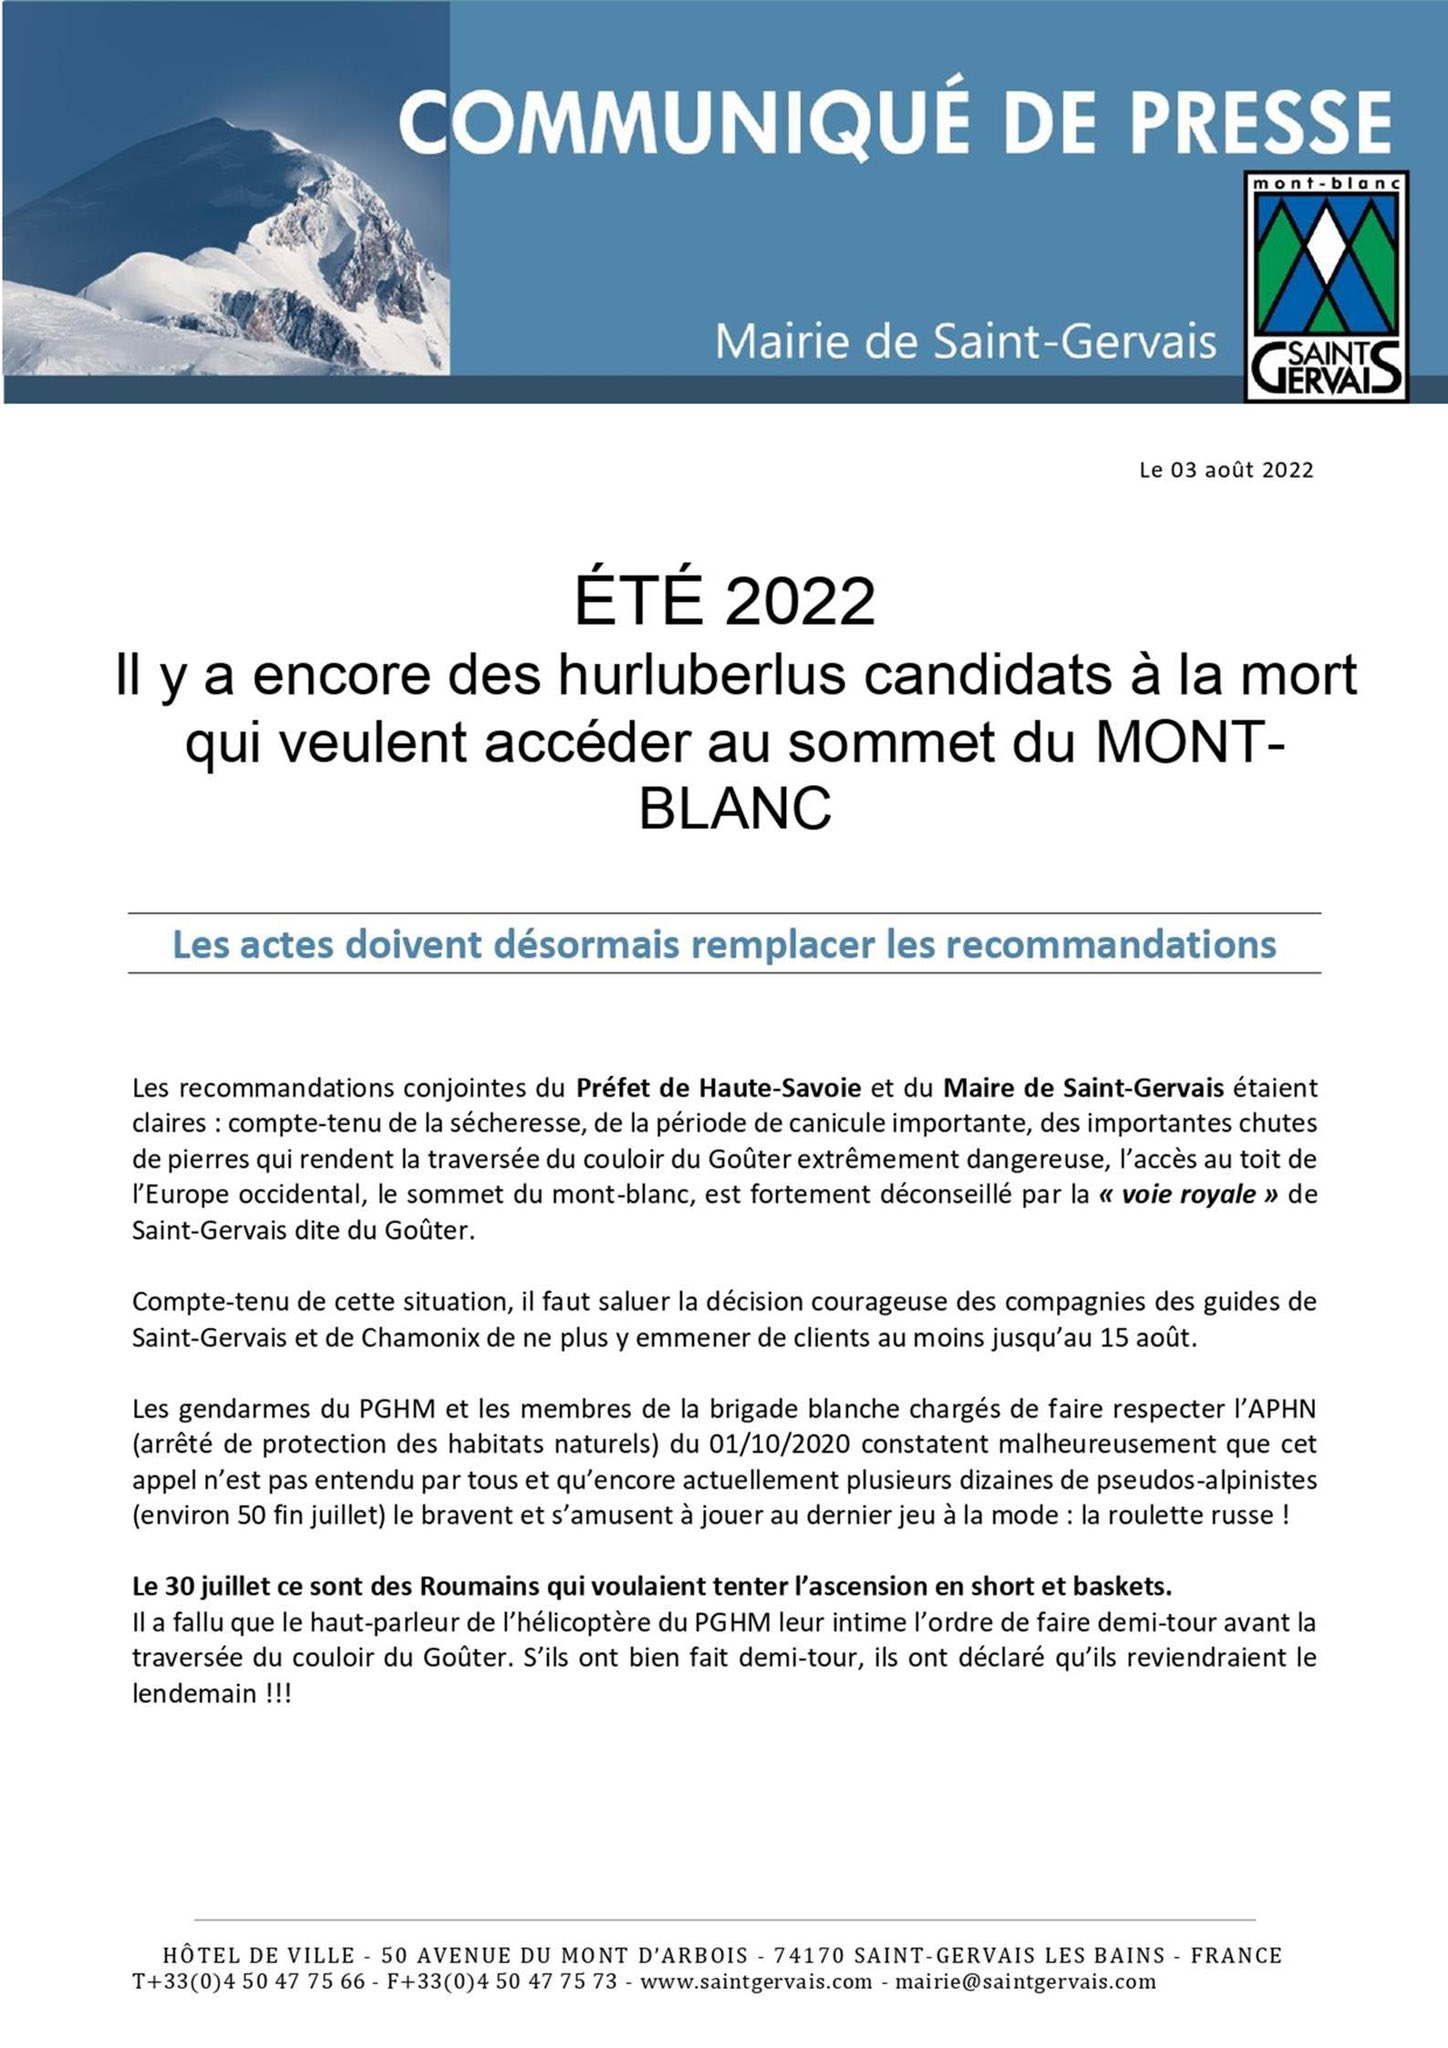 Jean-Marc PEILLEX on X: #saintgervais #montblanc